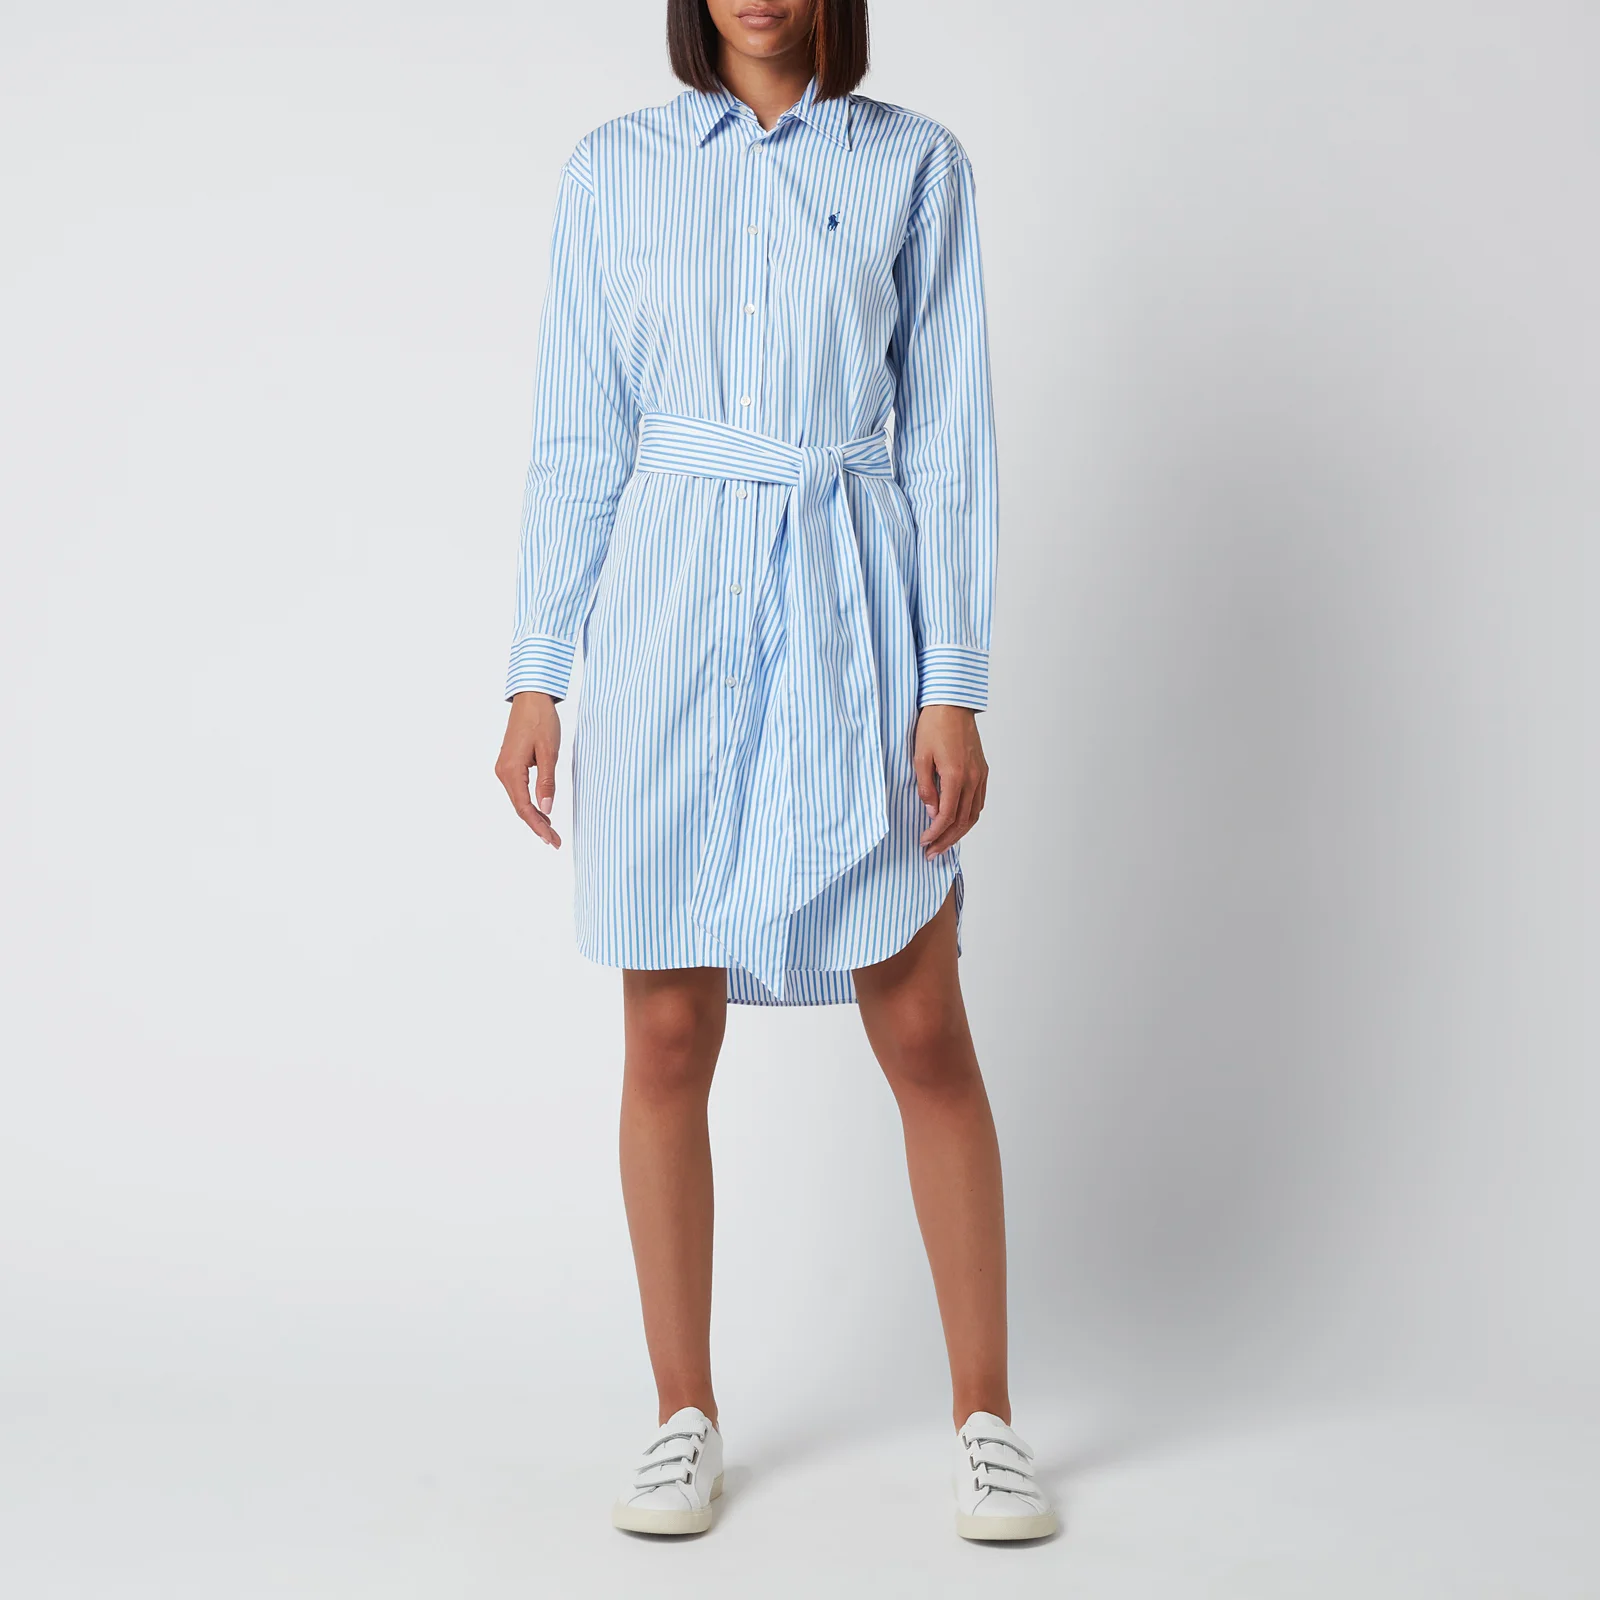 Polo Ralph Lauren Women's Long Sleeve Dress - White/Blue Image 1